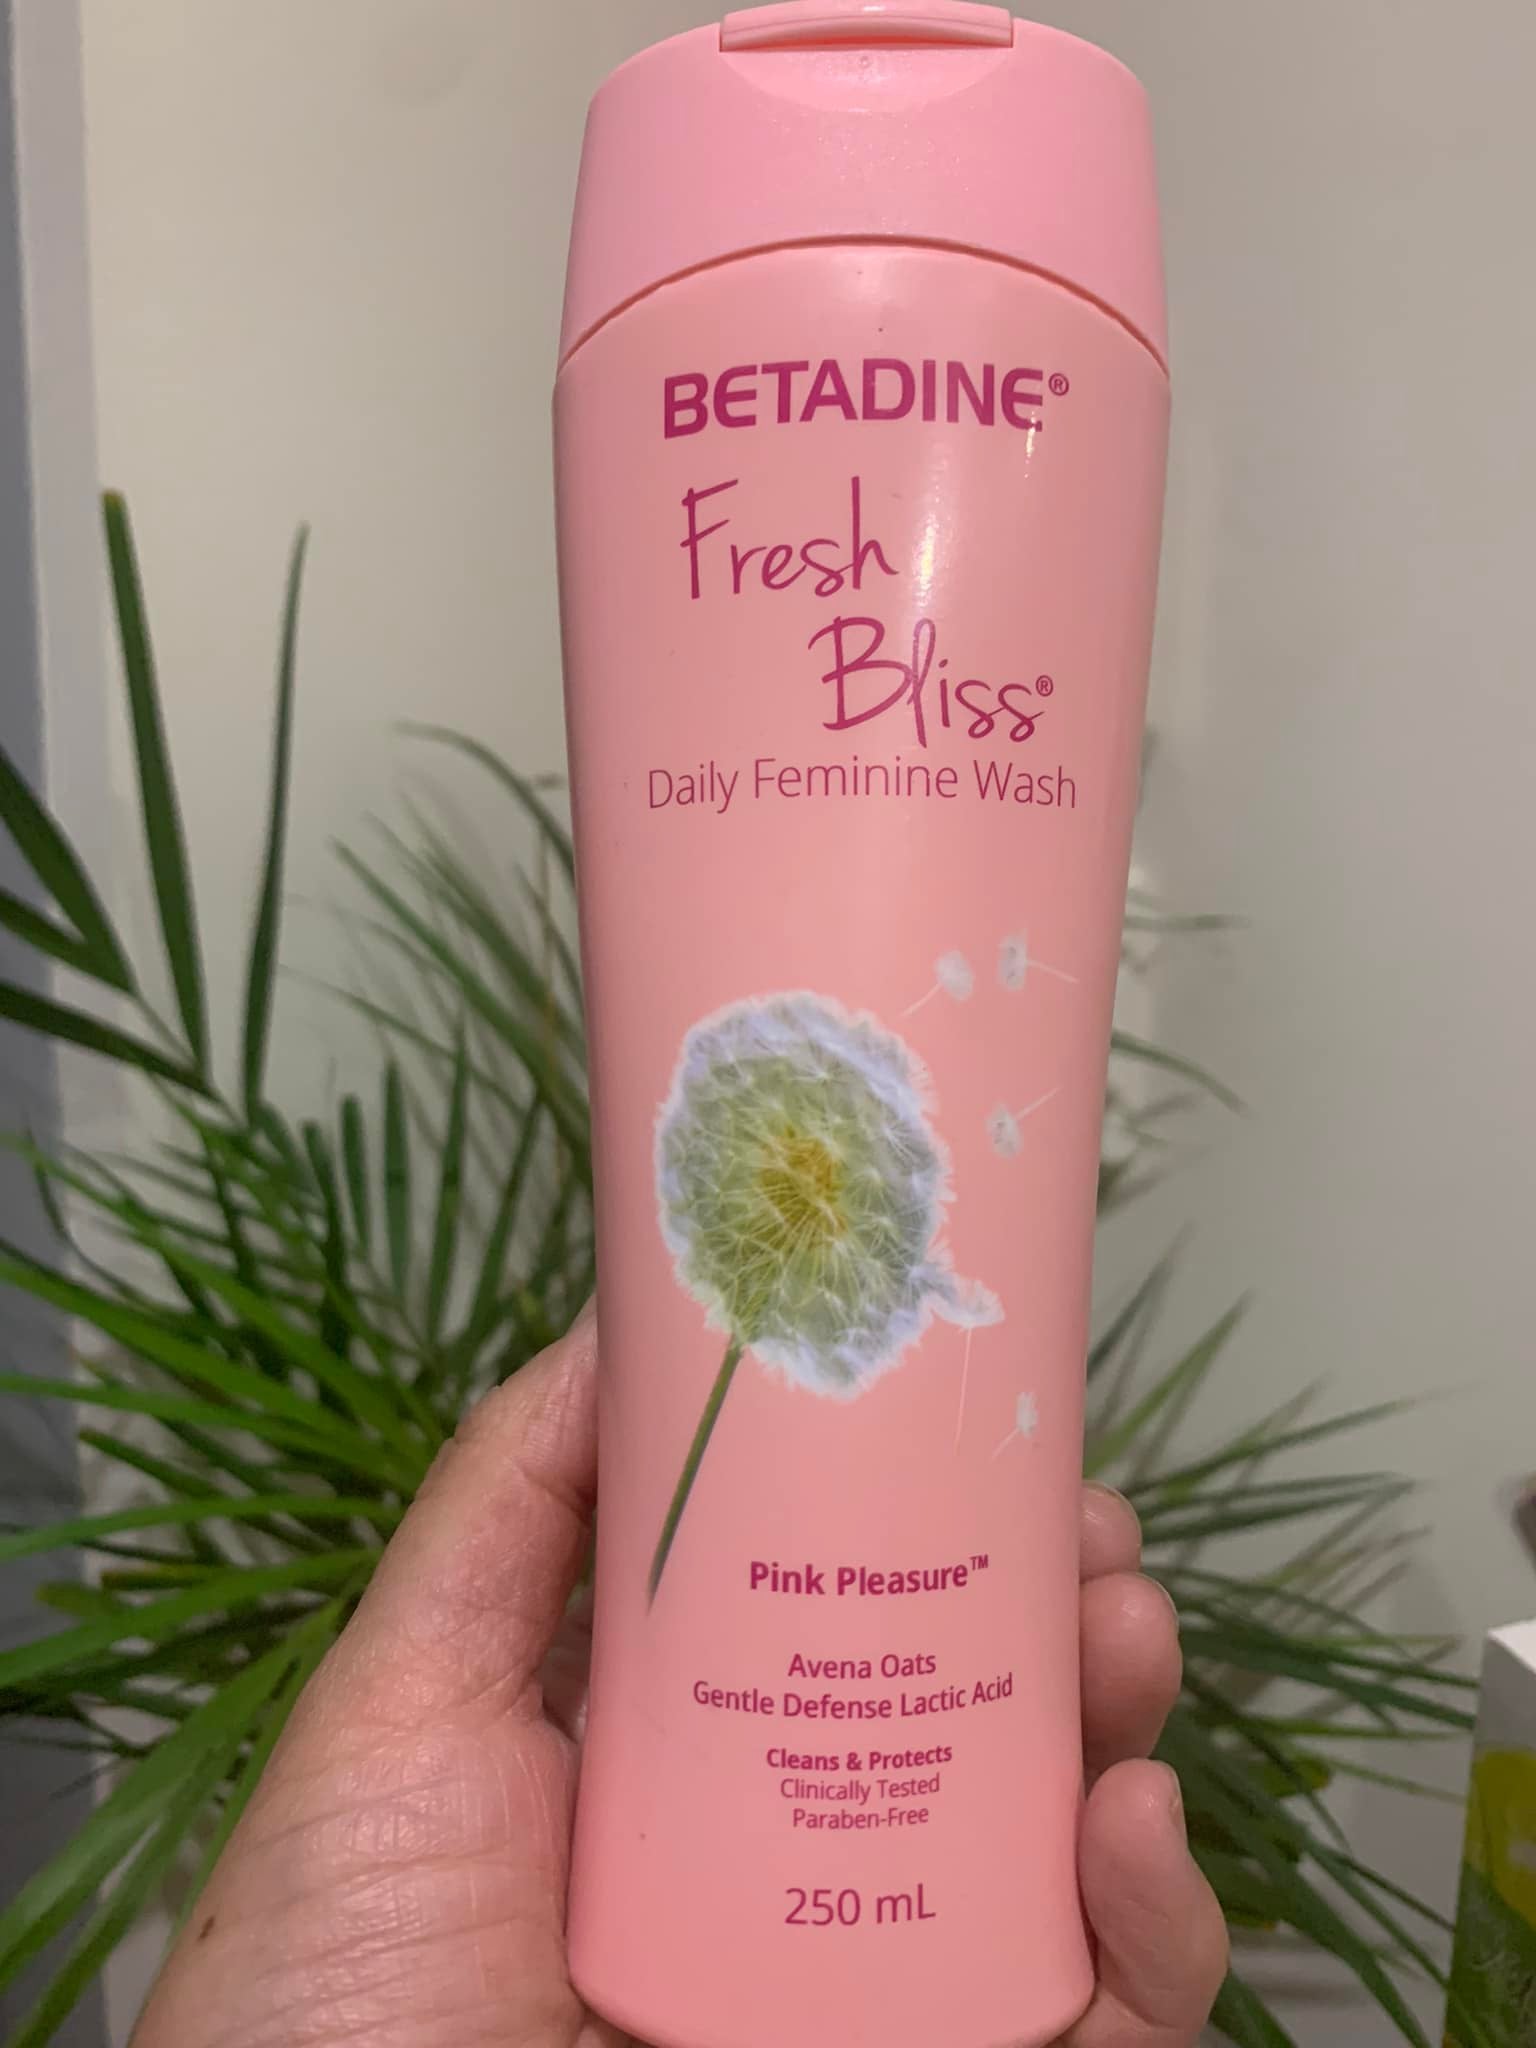 Betadine Fresh Bliss Daily Feminine Wash 250mL